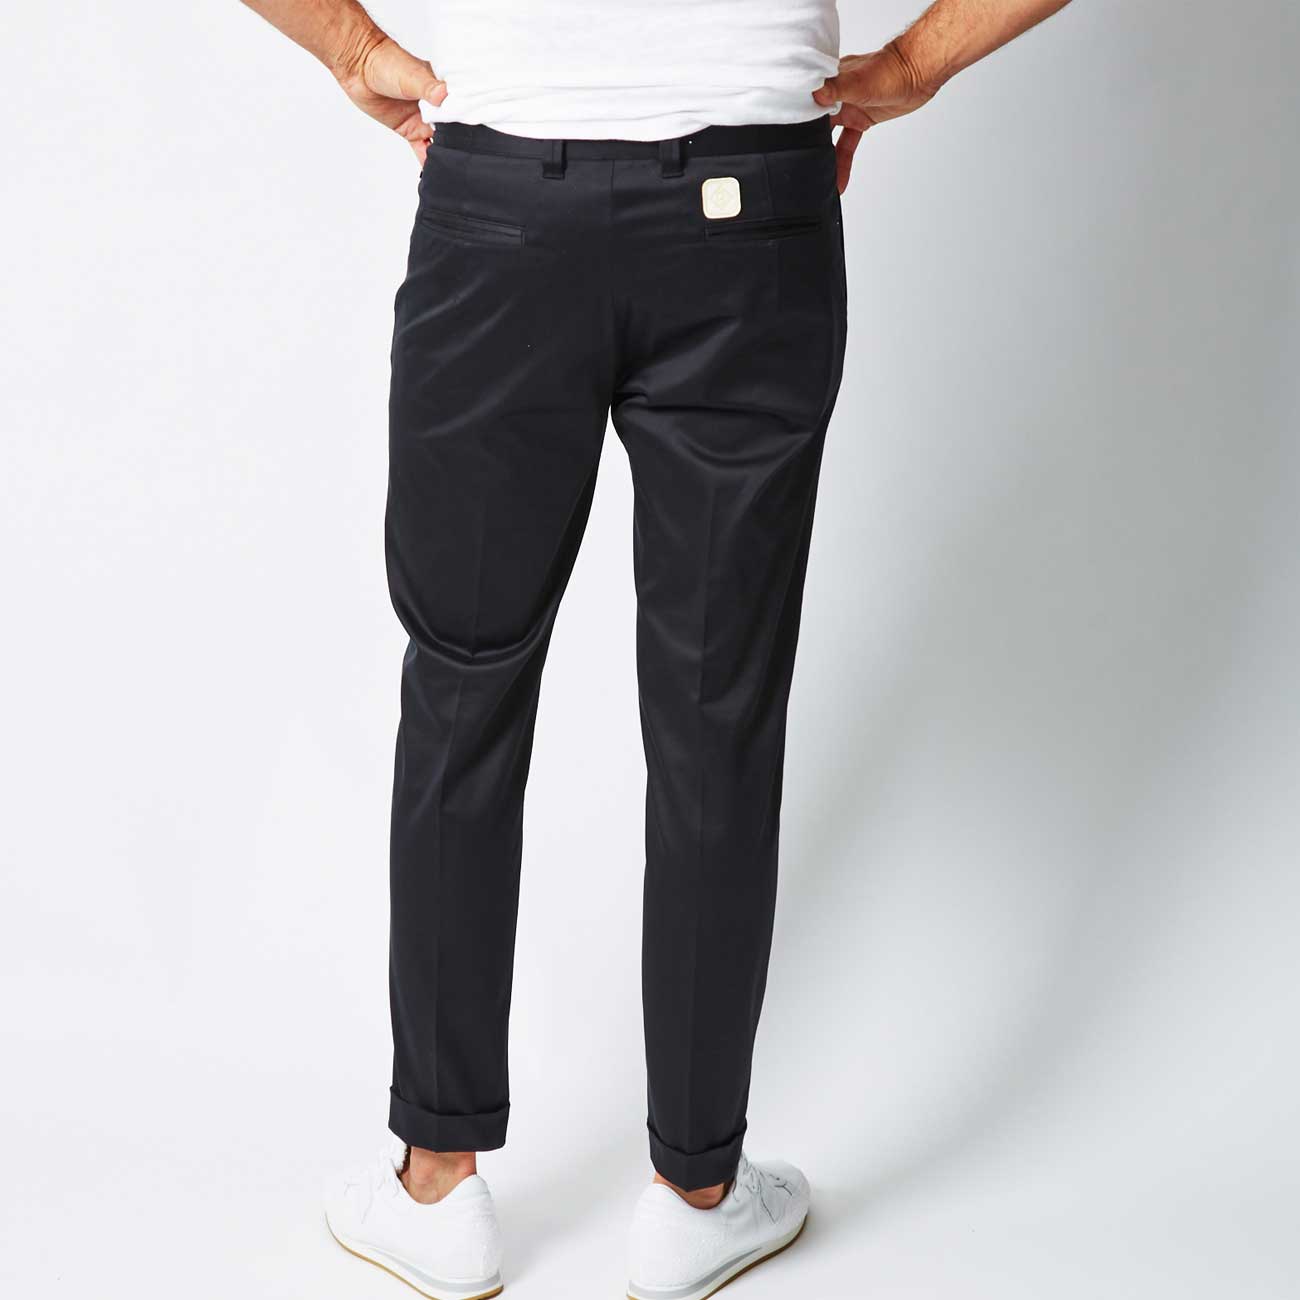 1PIU1UGUALE3 x Giab's easy Italian trousers [black] - 1piu1uguale3 Osaka -  ウノピゥウノウグァーレトレ大阪オンラインストア